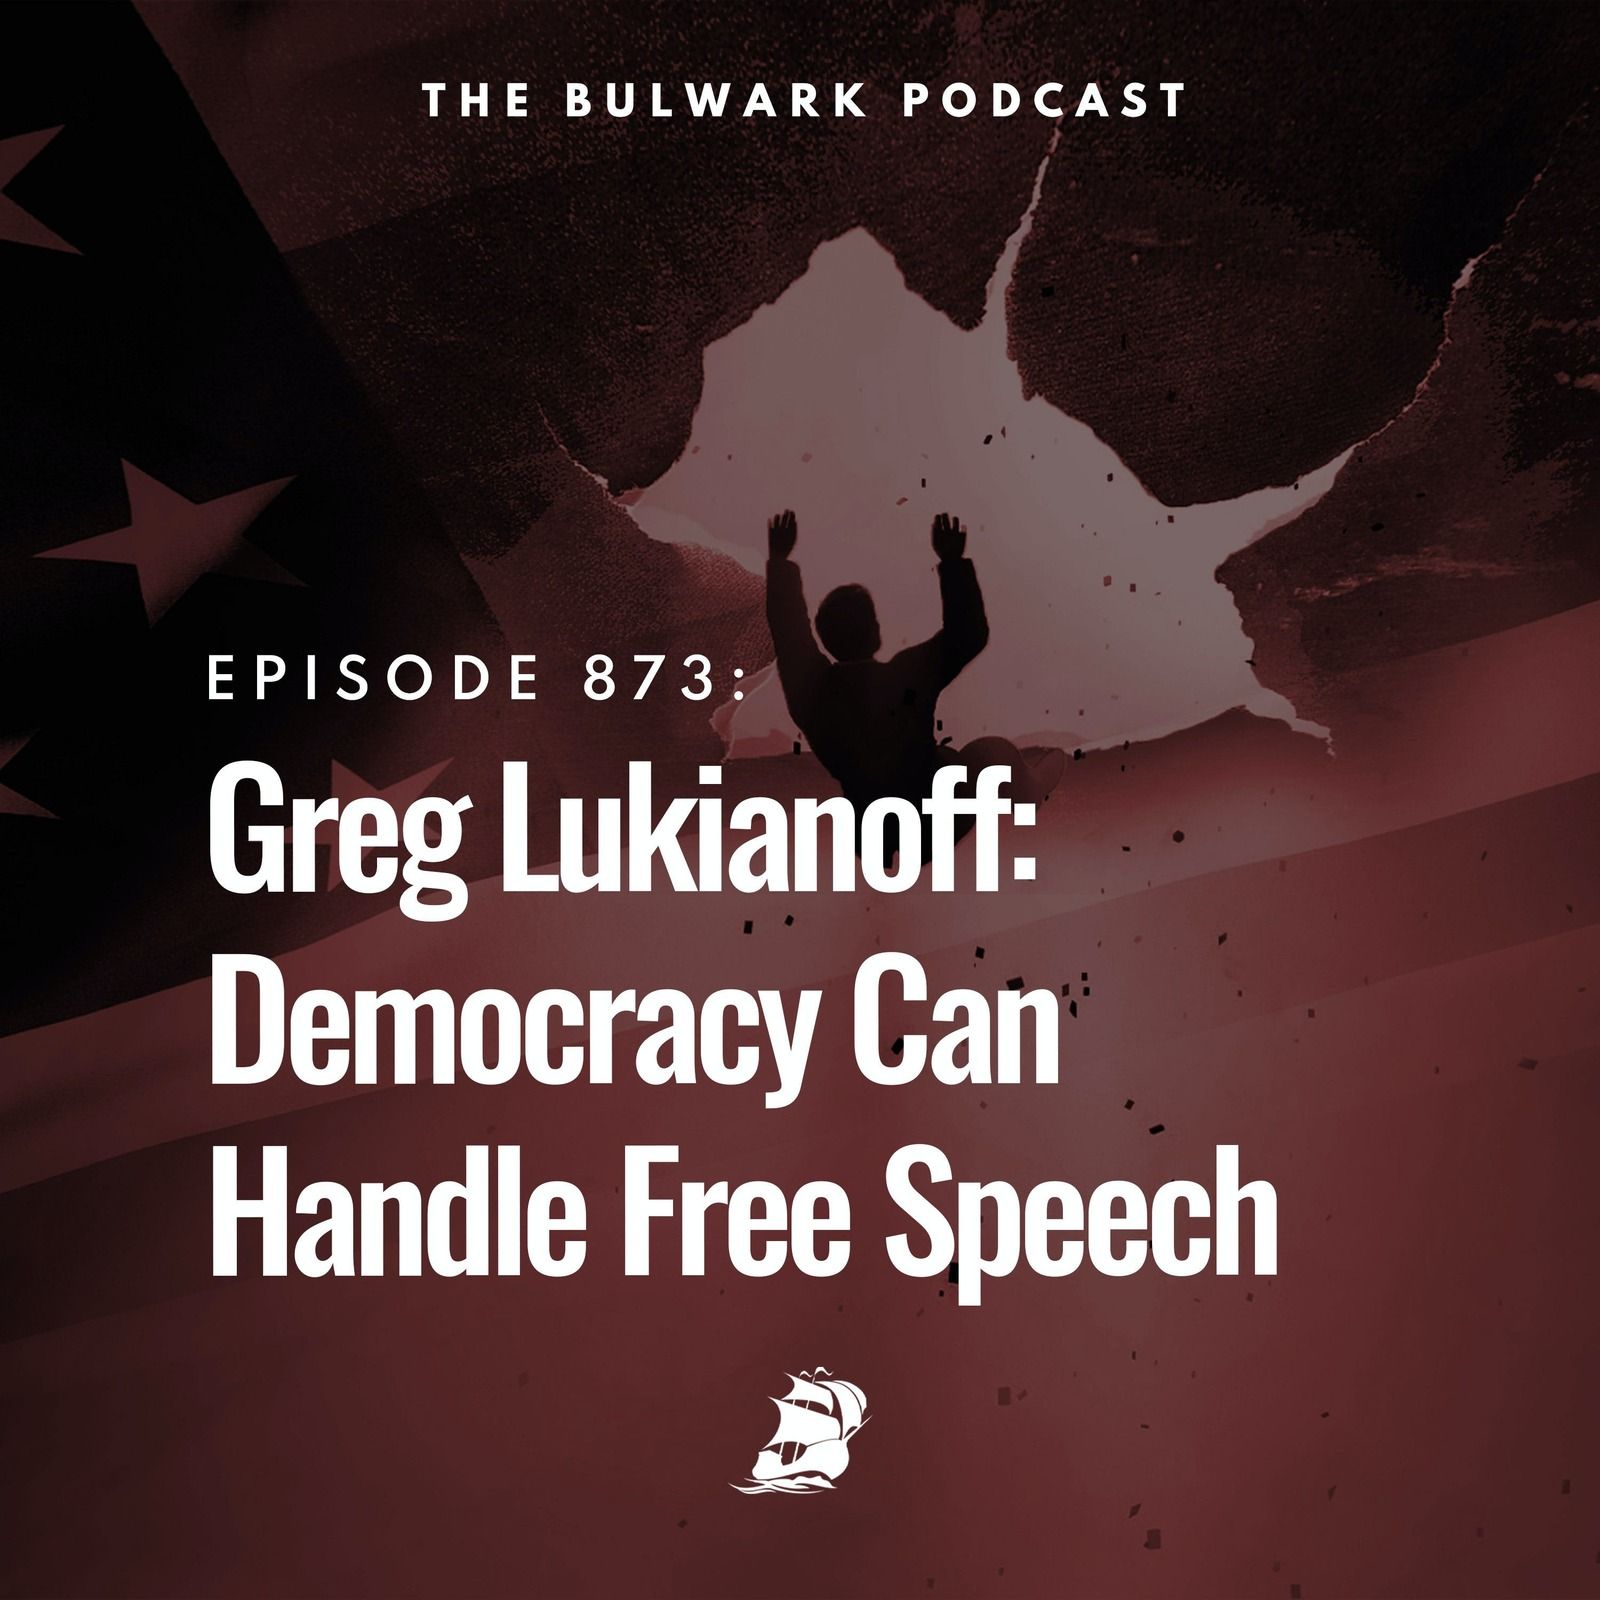 Greg Lukianoff: Democracy Can Handle Free Speech by The Bulwark Podcast